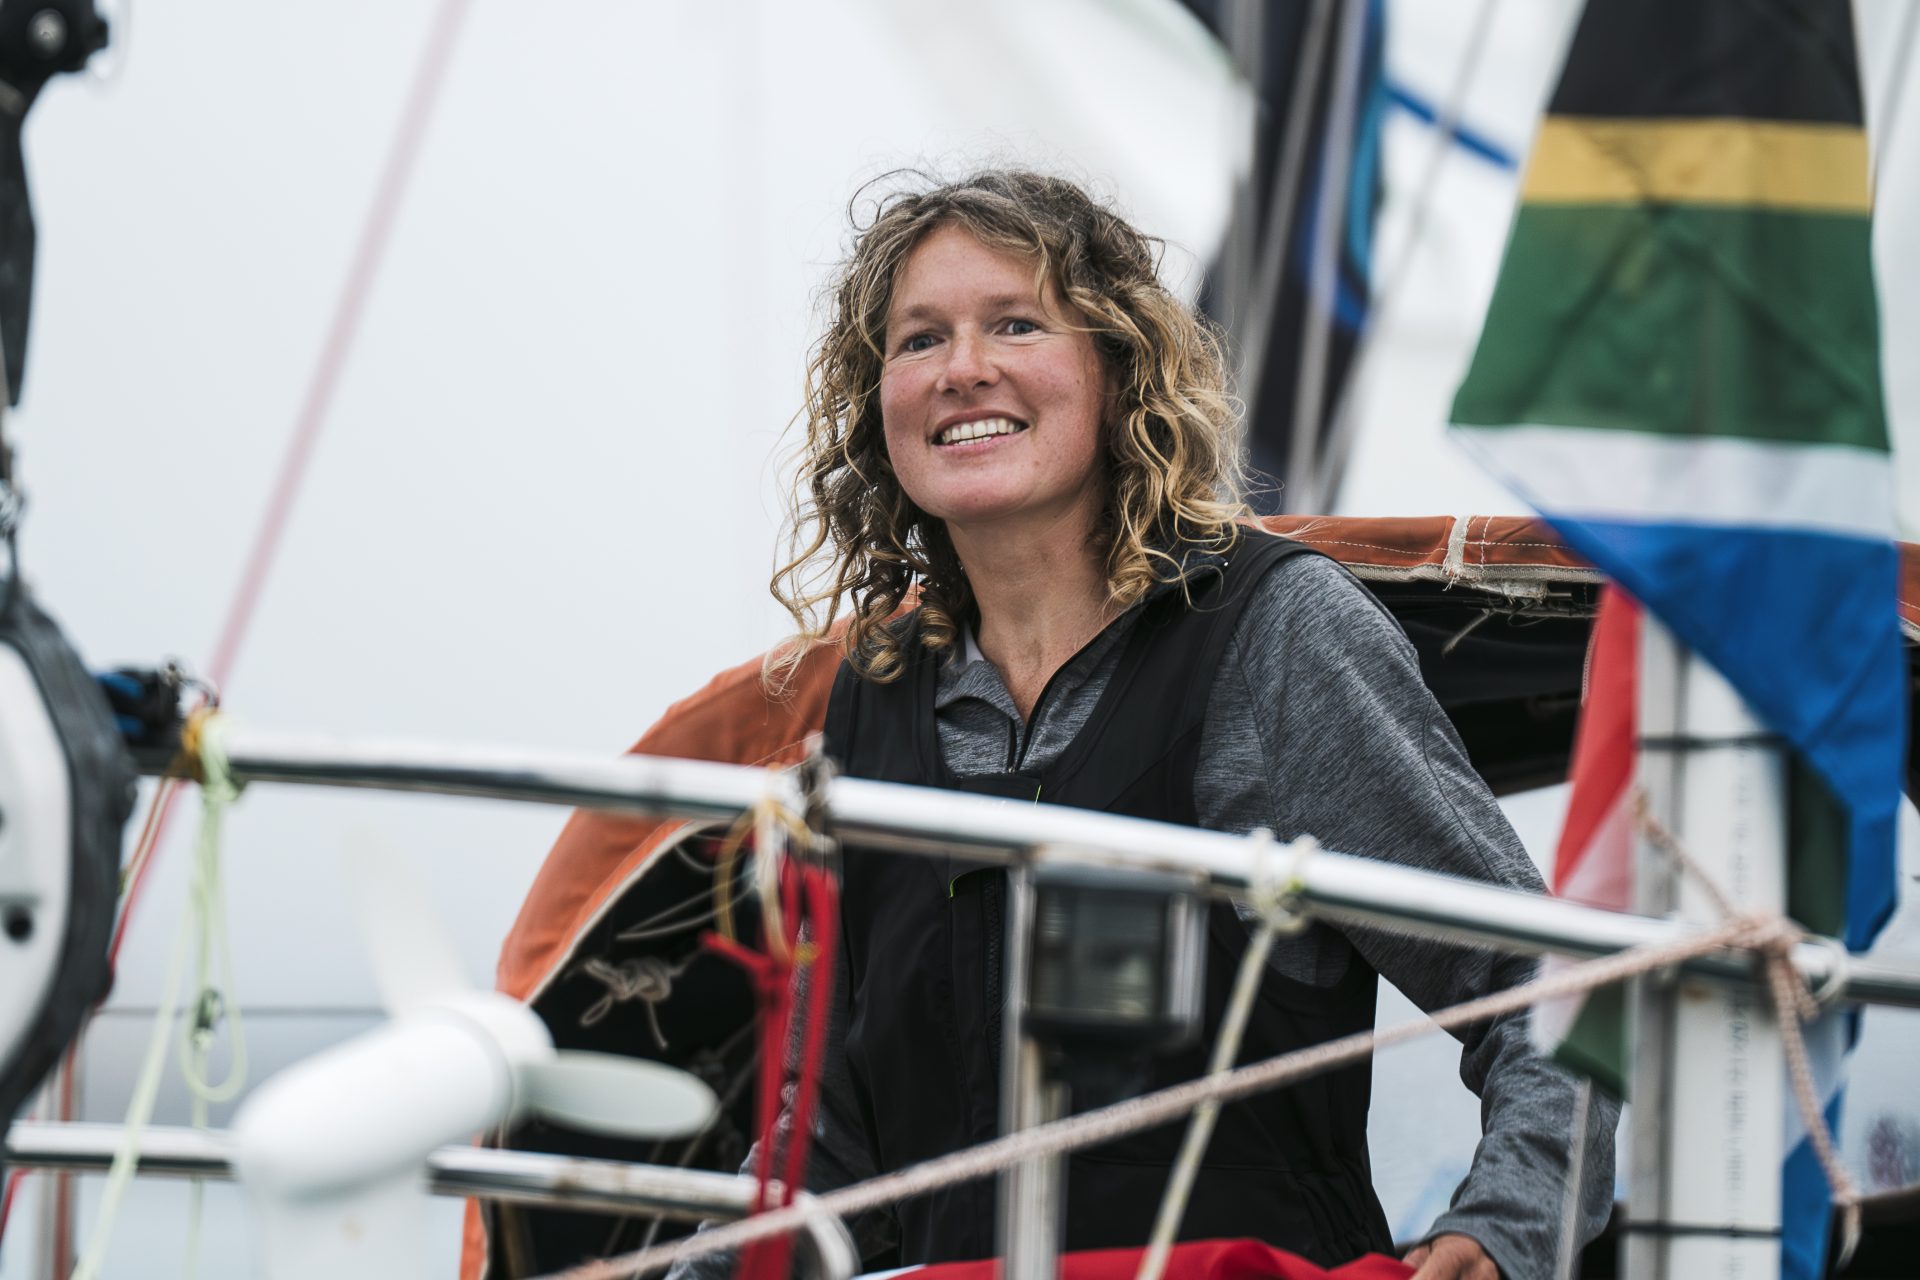 Kirsten Neuschäfer named 2023 Sailor of the Year after historic Golden Globe Race win